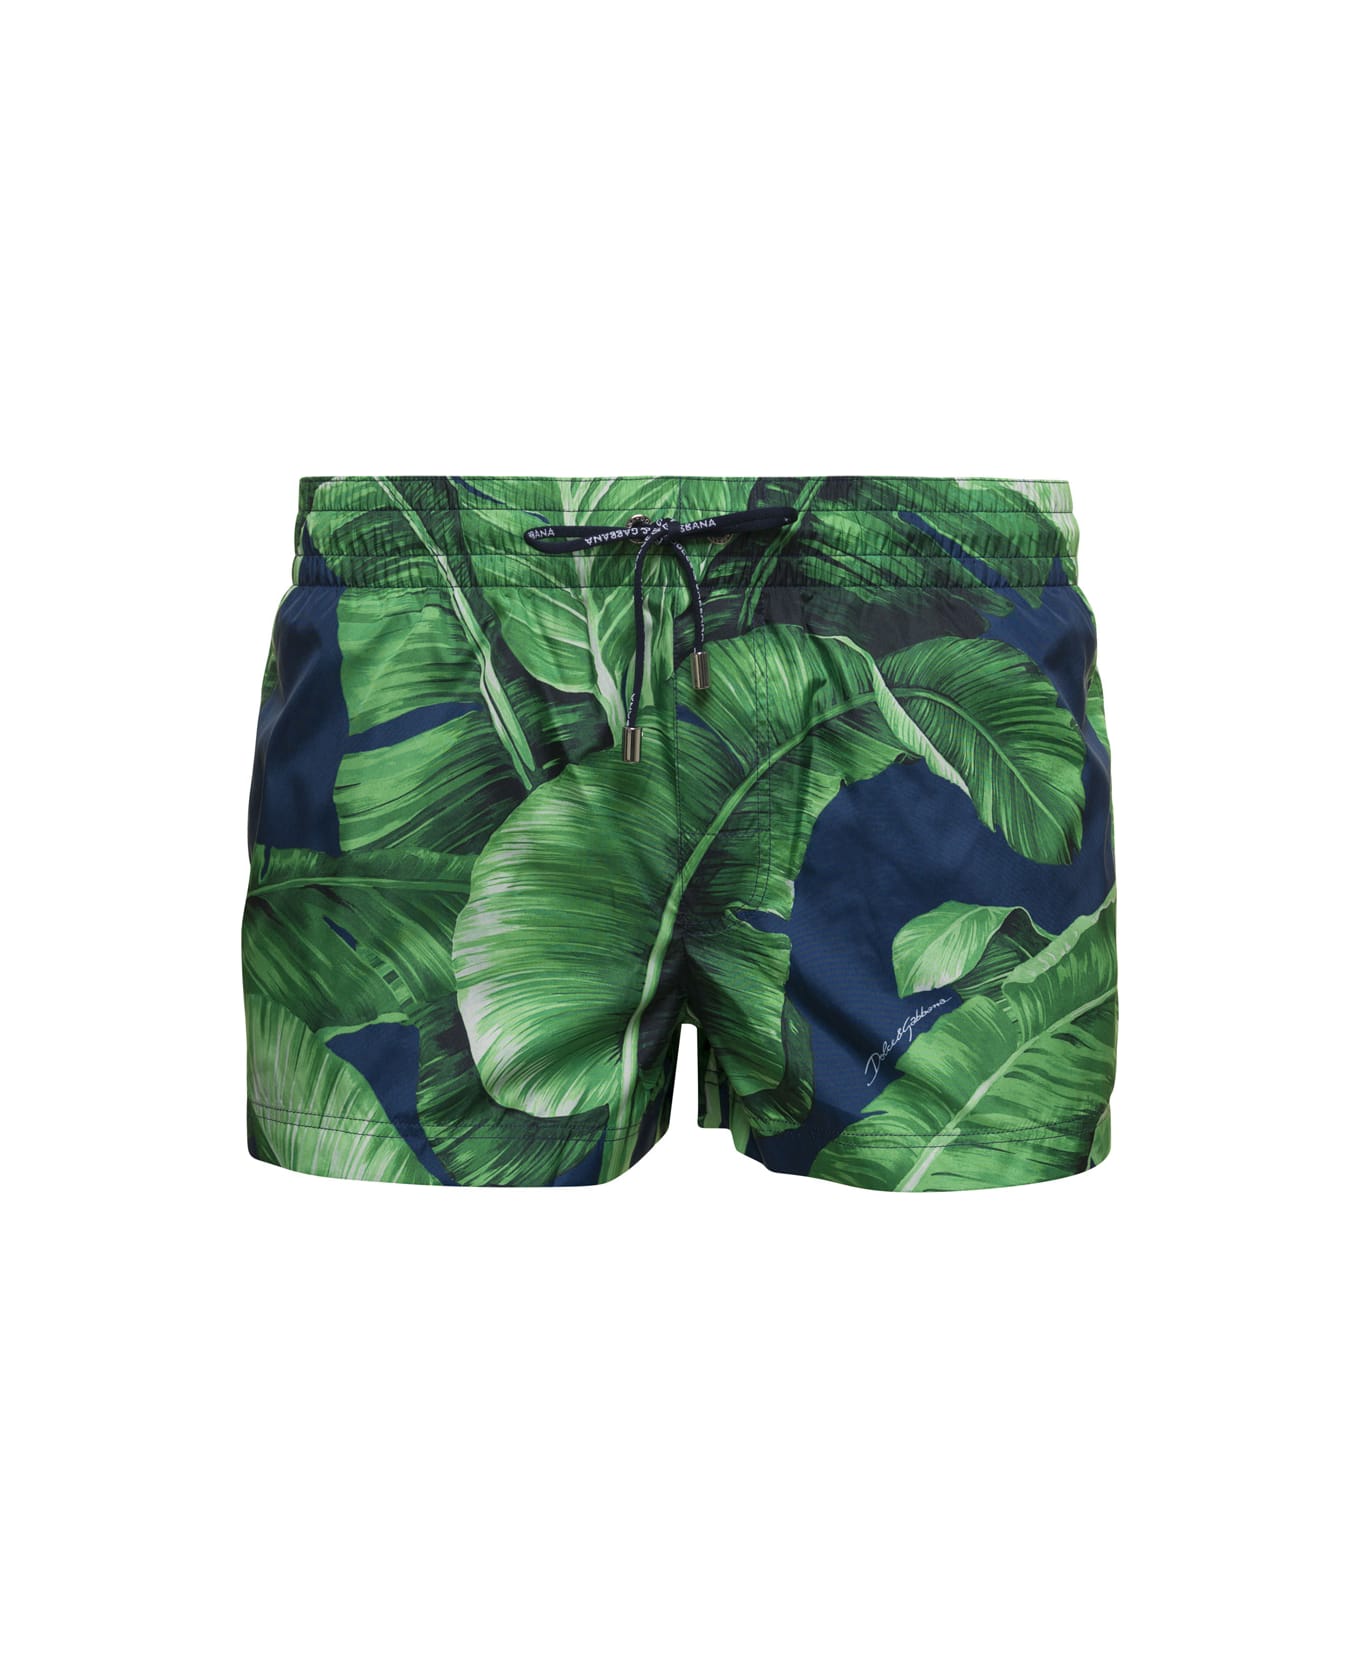 Dolce & Gabbana Printed Swimsuit - Green 水着